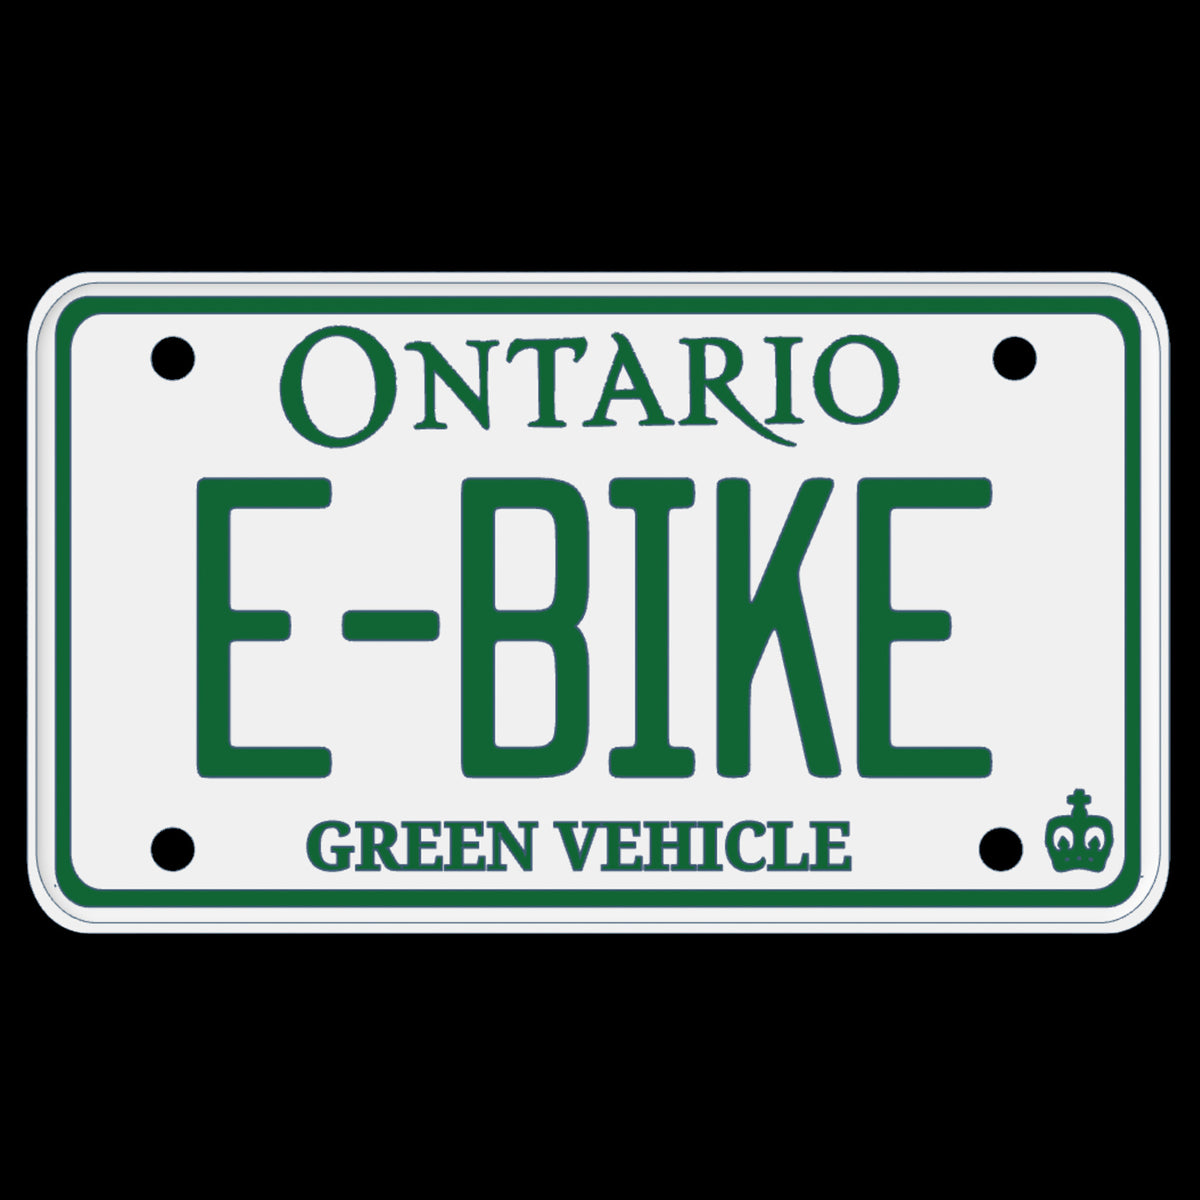 ontario-green-vehicle-e-bike-license-plate-ygk3d